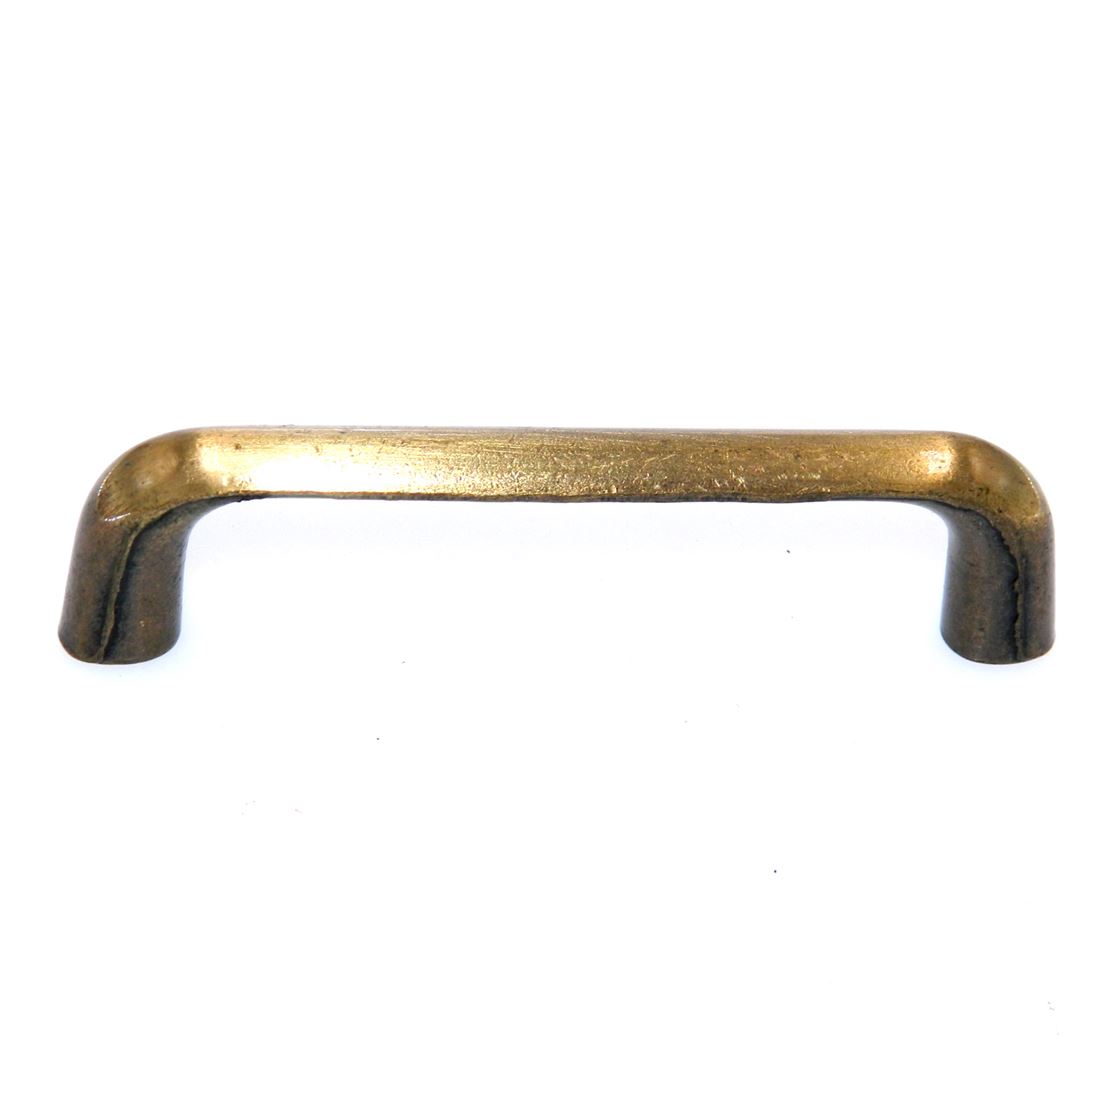 Vintage brass Drawer Pull, Cabinet hardware